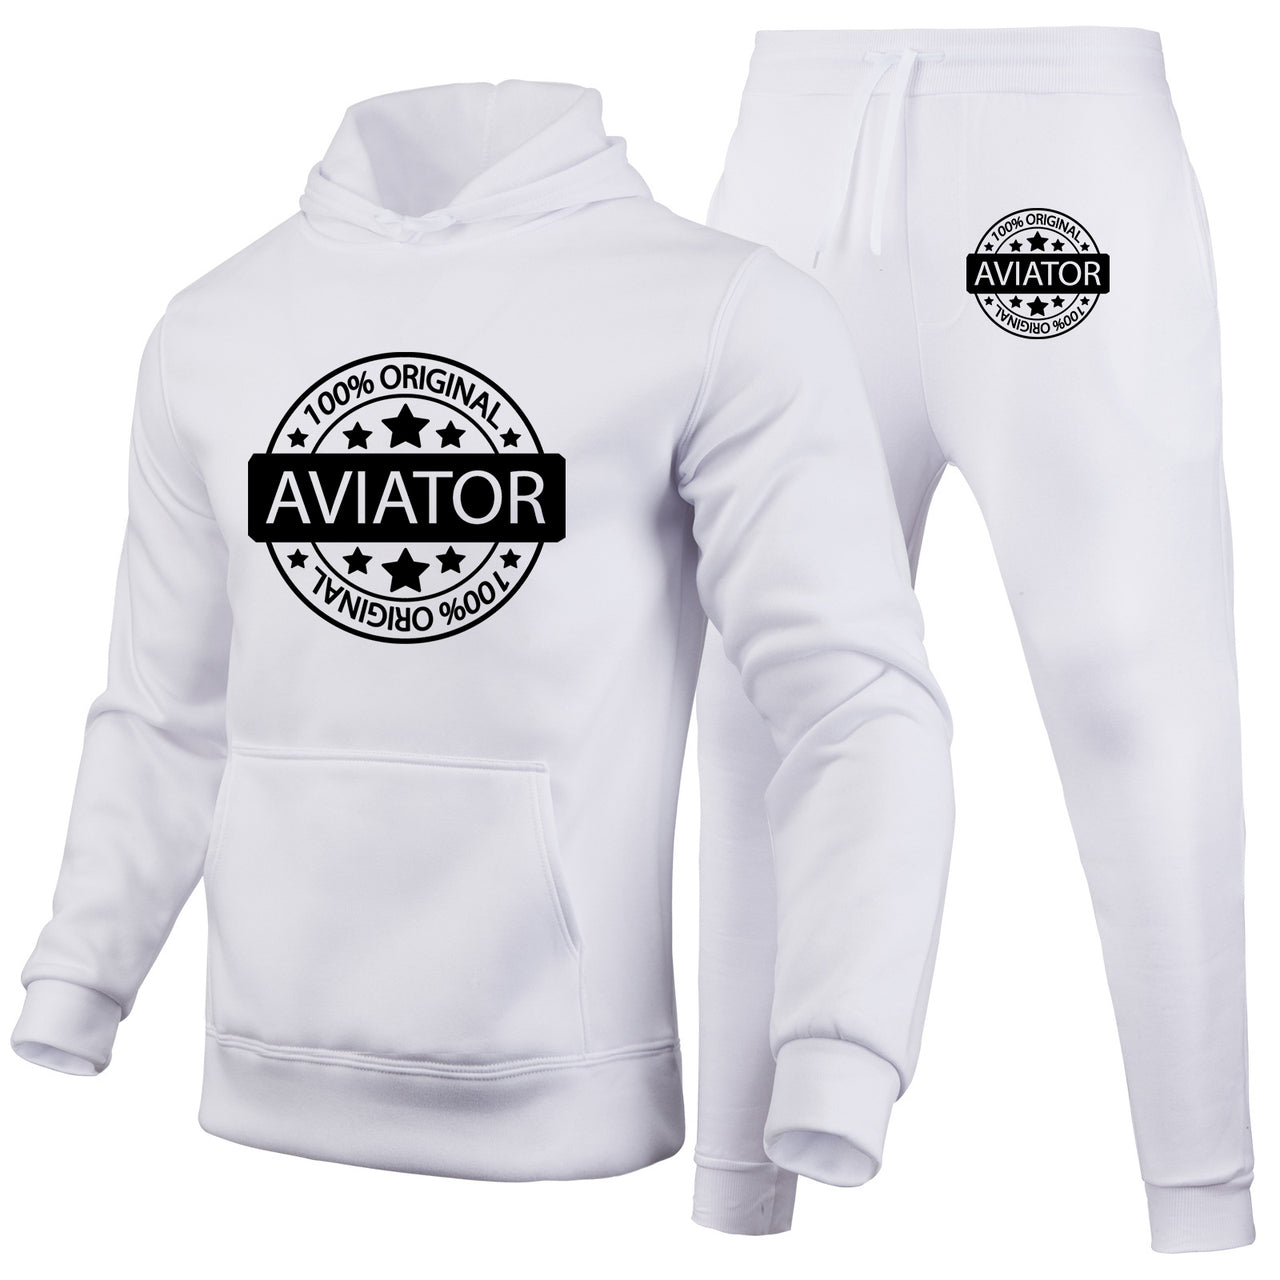 100 Original Aviator Designed Hoodies & Sweatpants Set